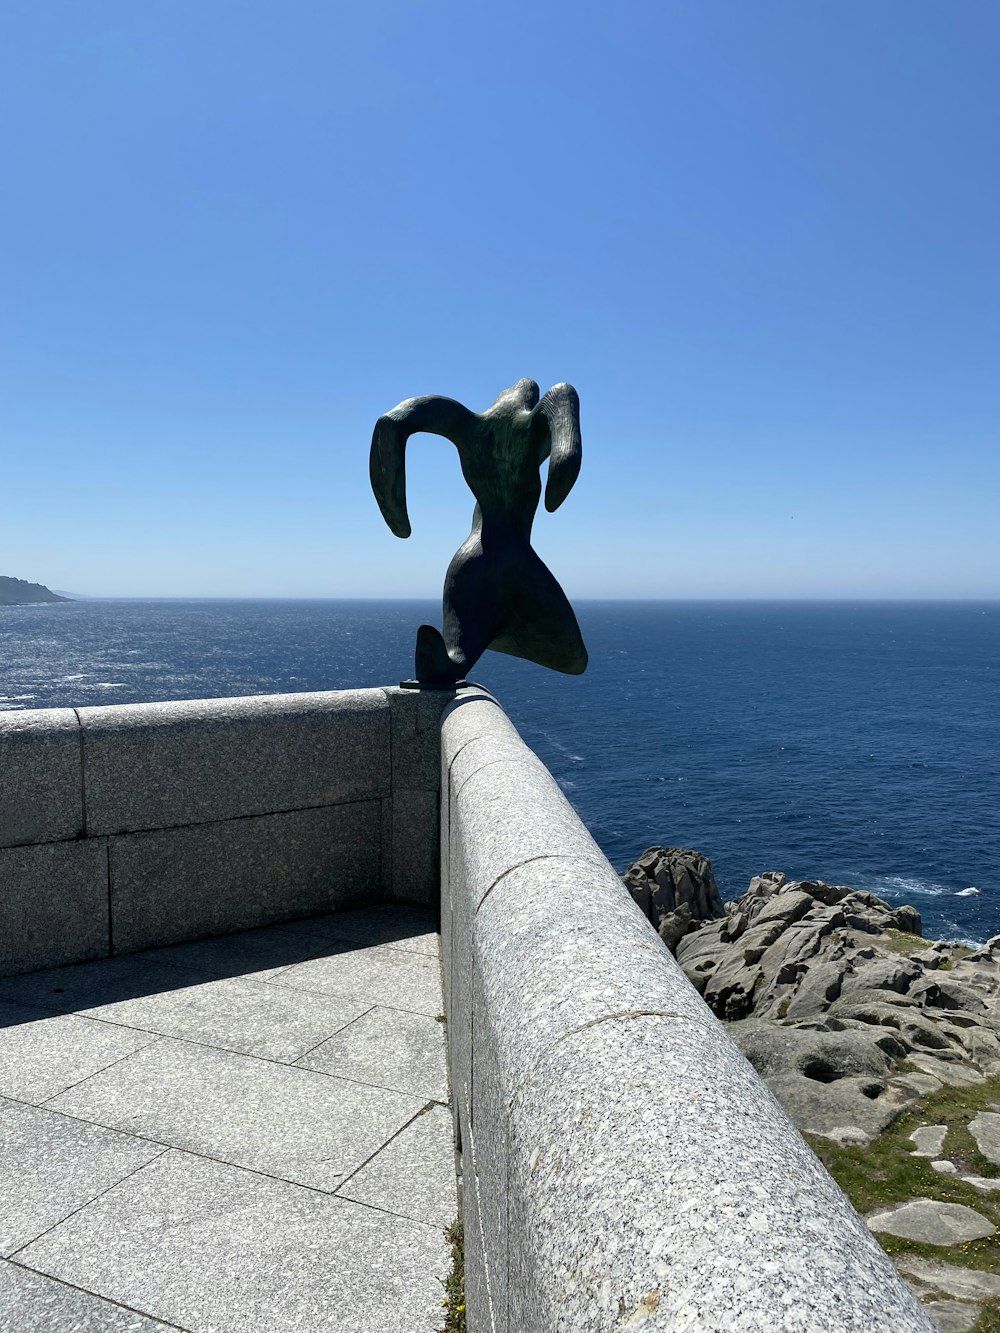 a statue of a man on a ledge near the ocean